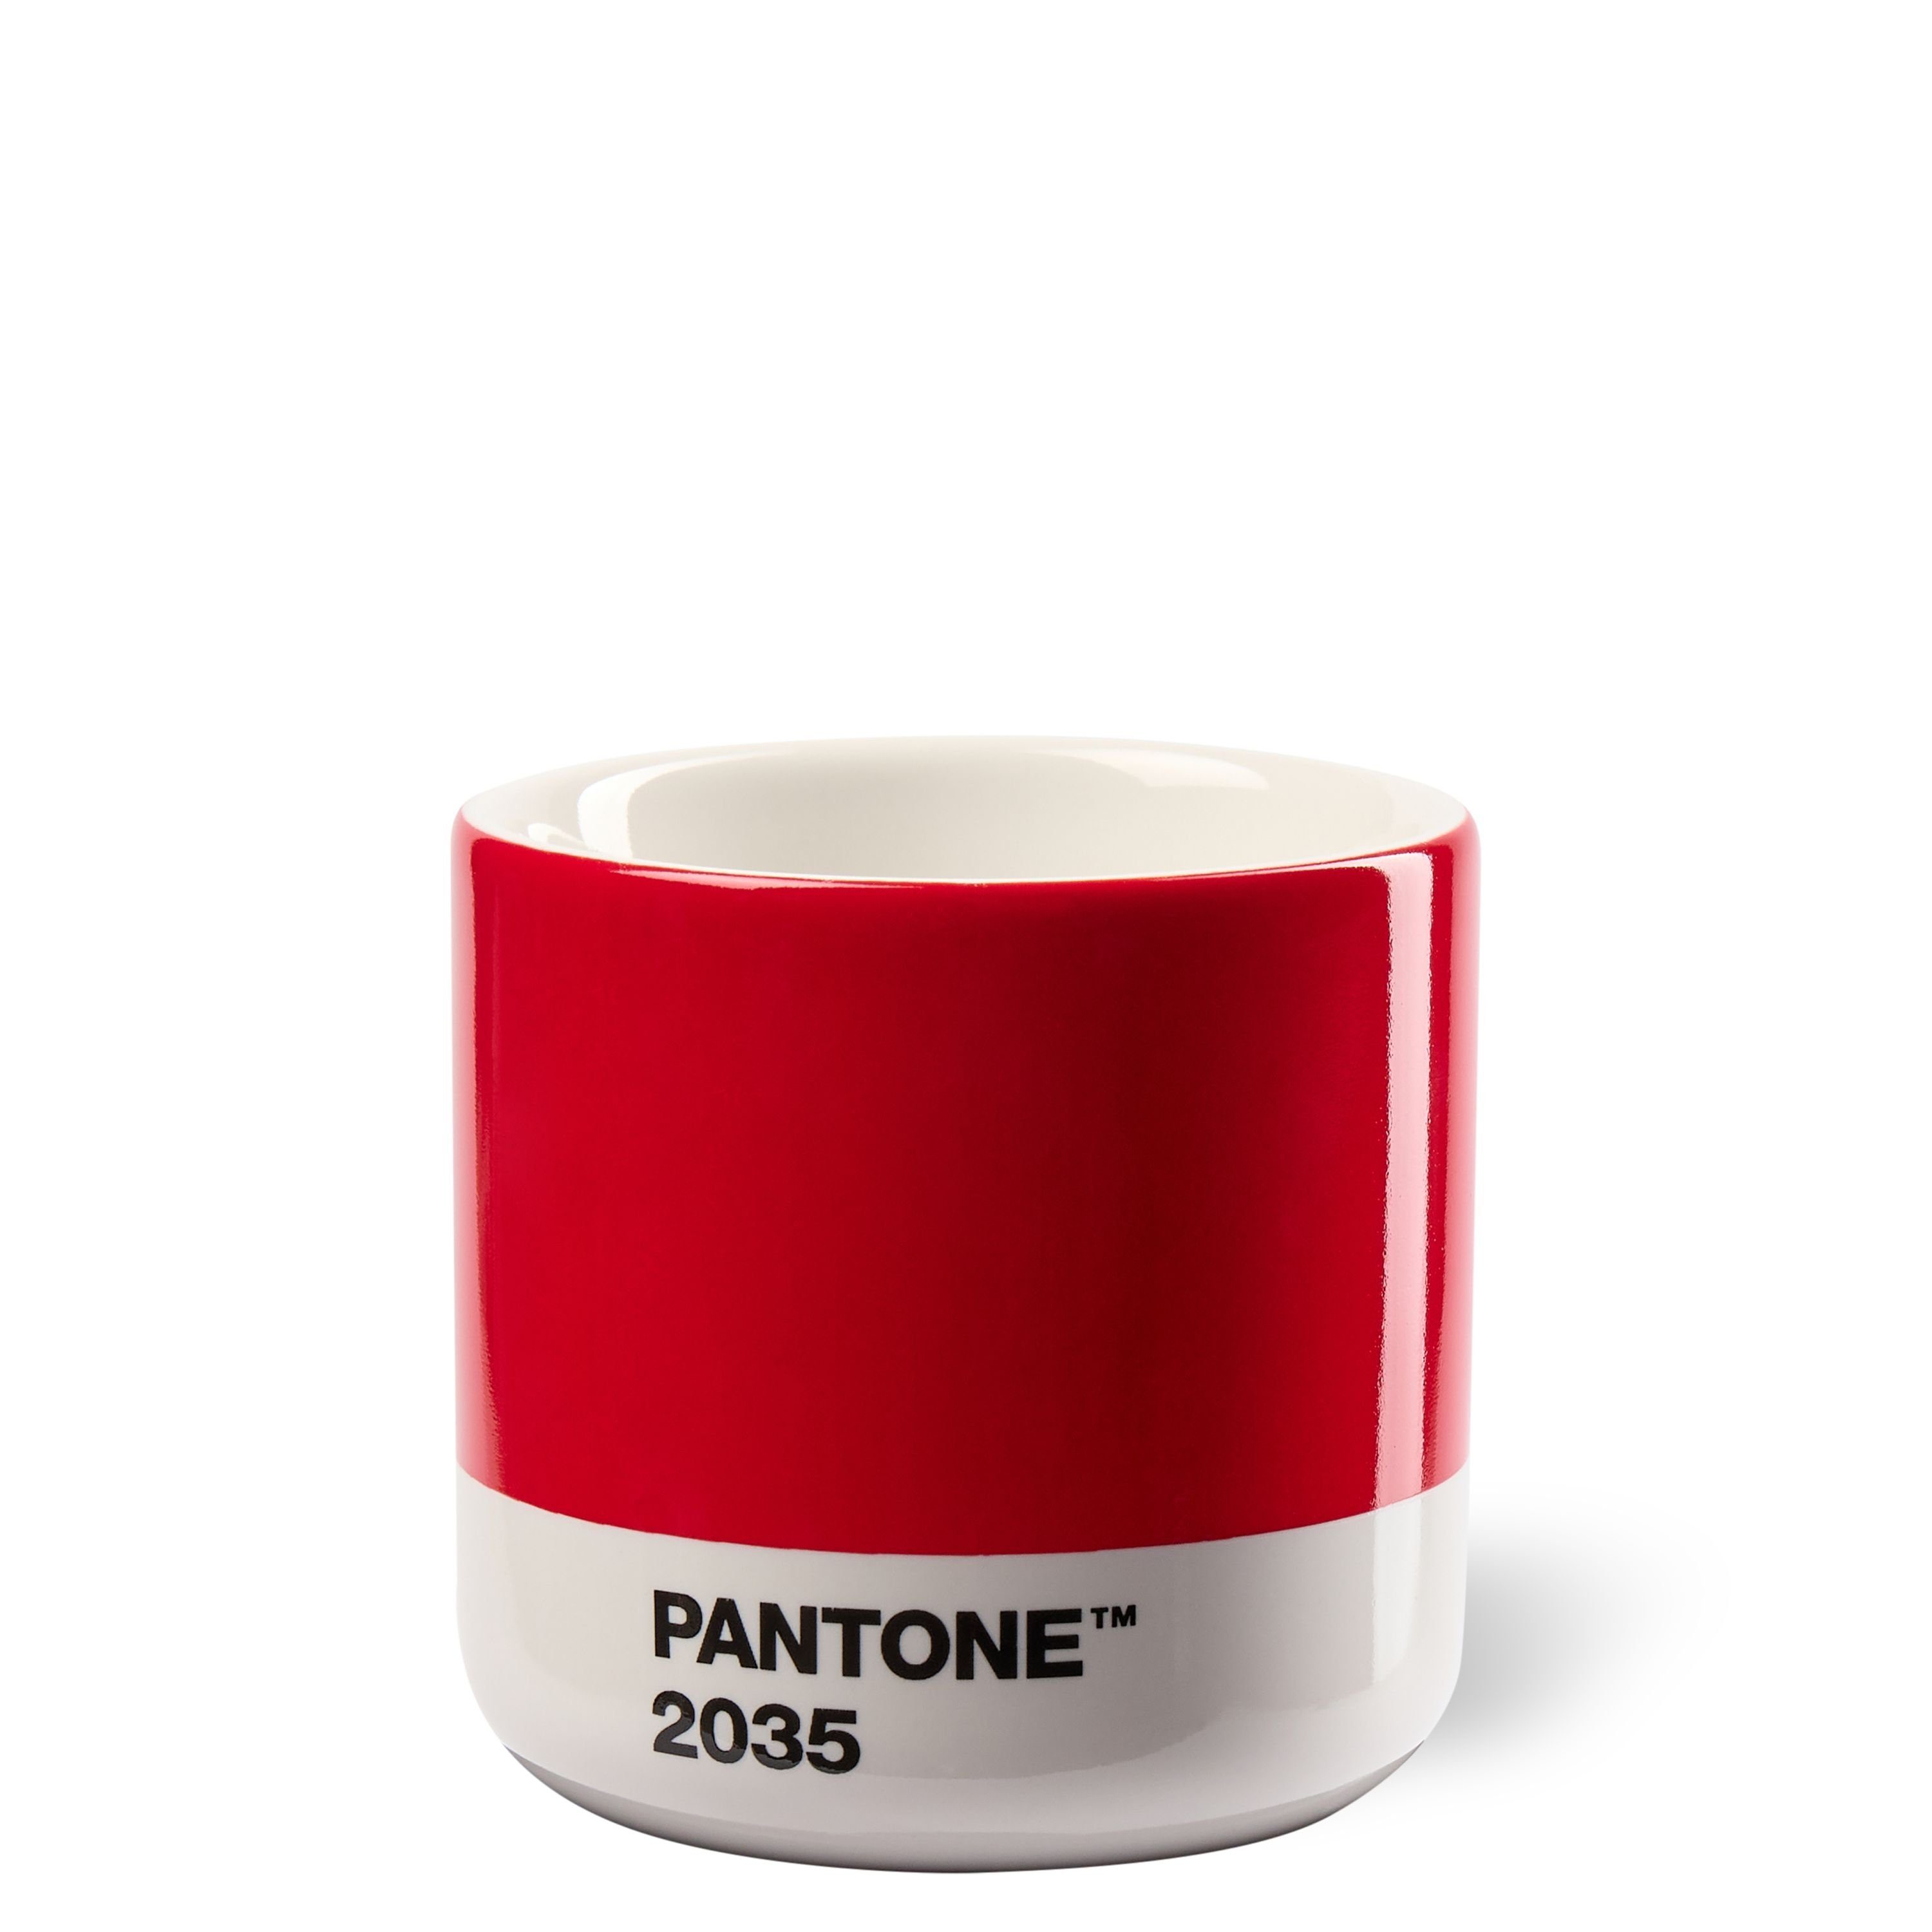 2035 PANTONE Macchiato Kaffeeservice, C Red PANTONE Porzellan Thermobecher